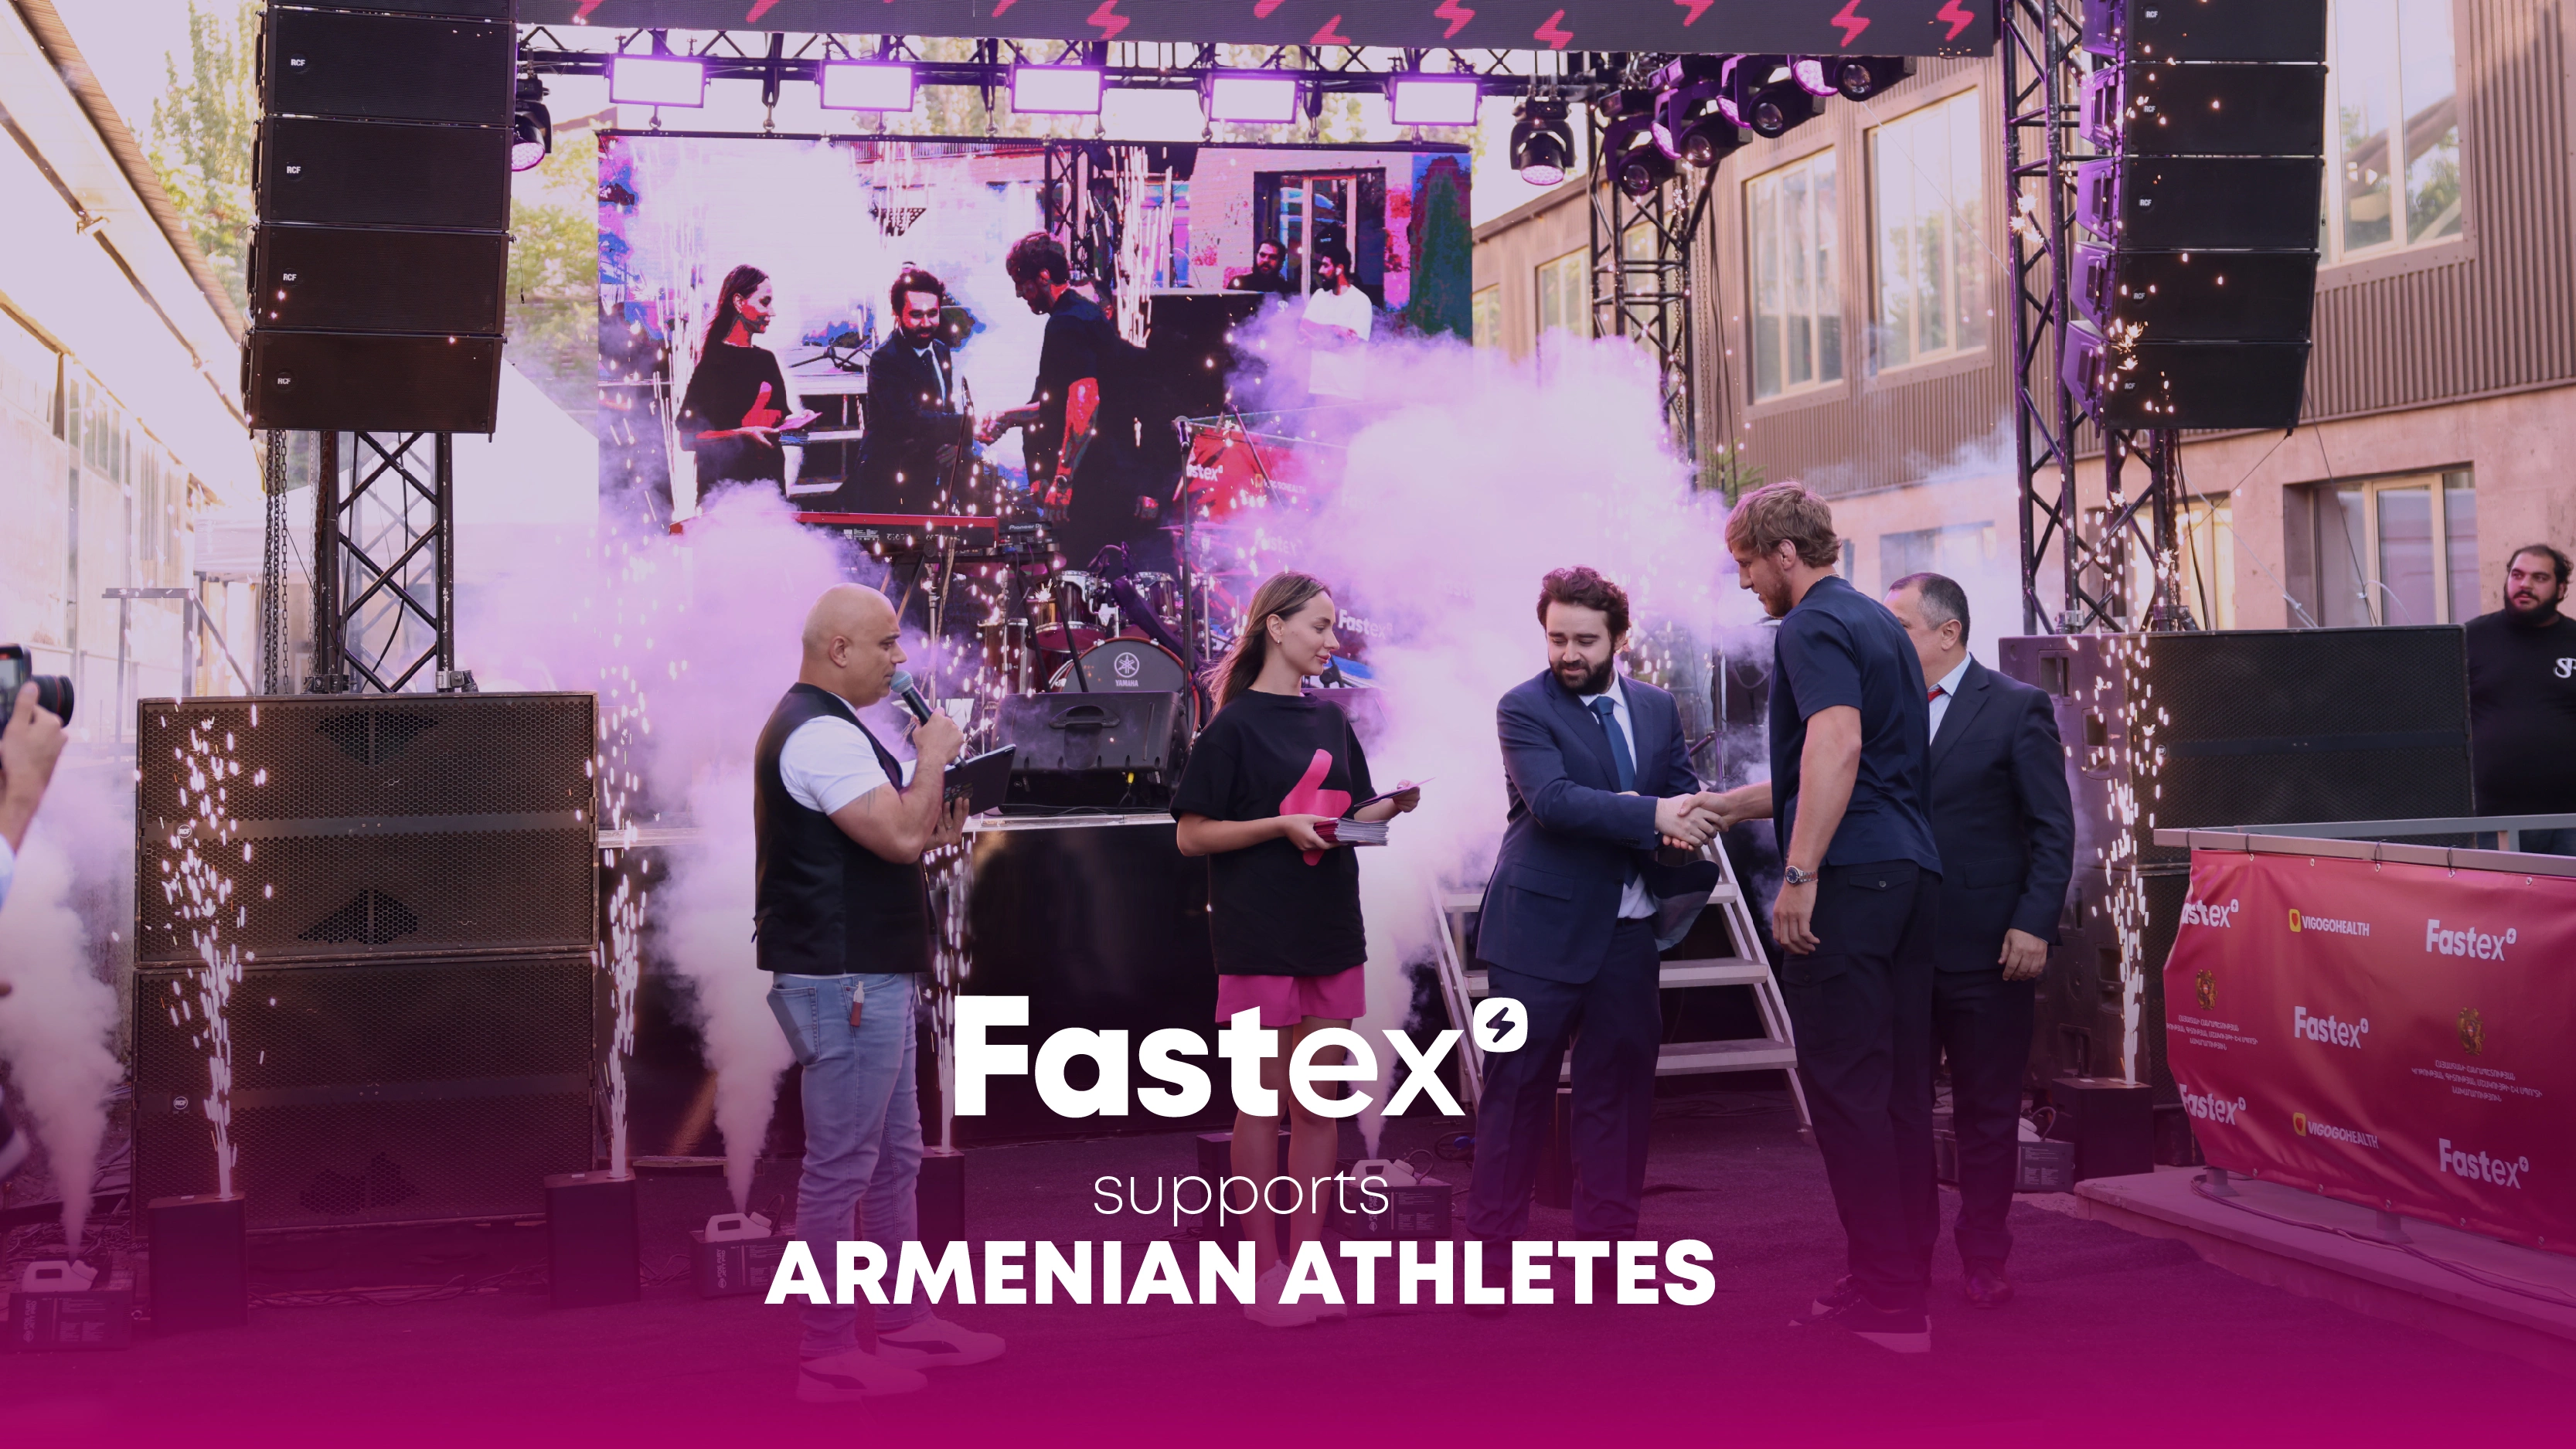 Fastex rewarded 103 representatives of Armenian sports with 230.000 FTN